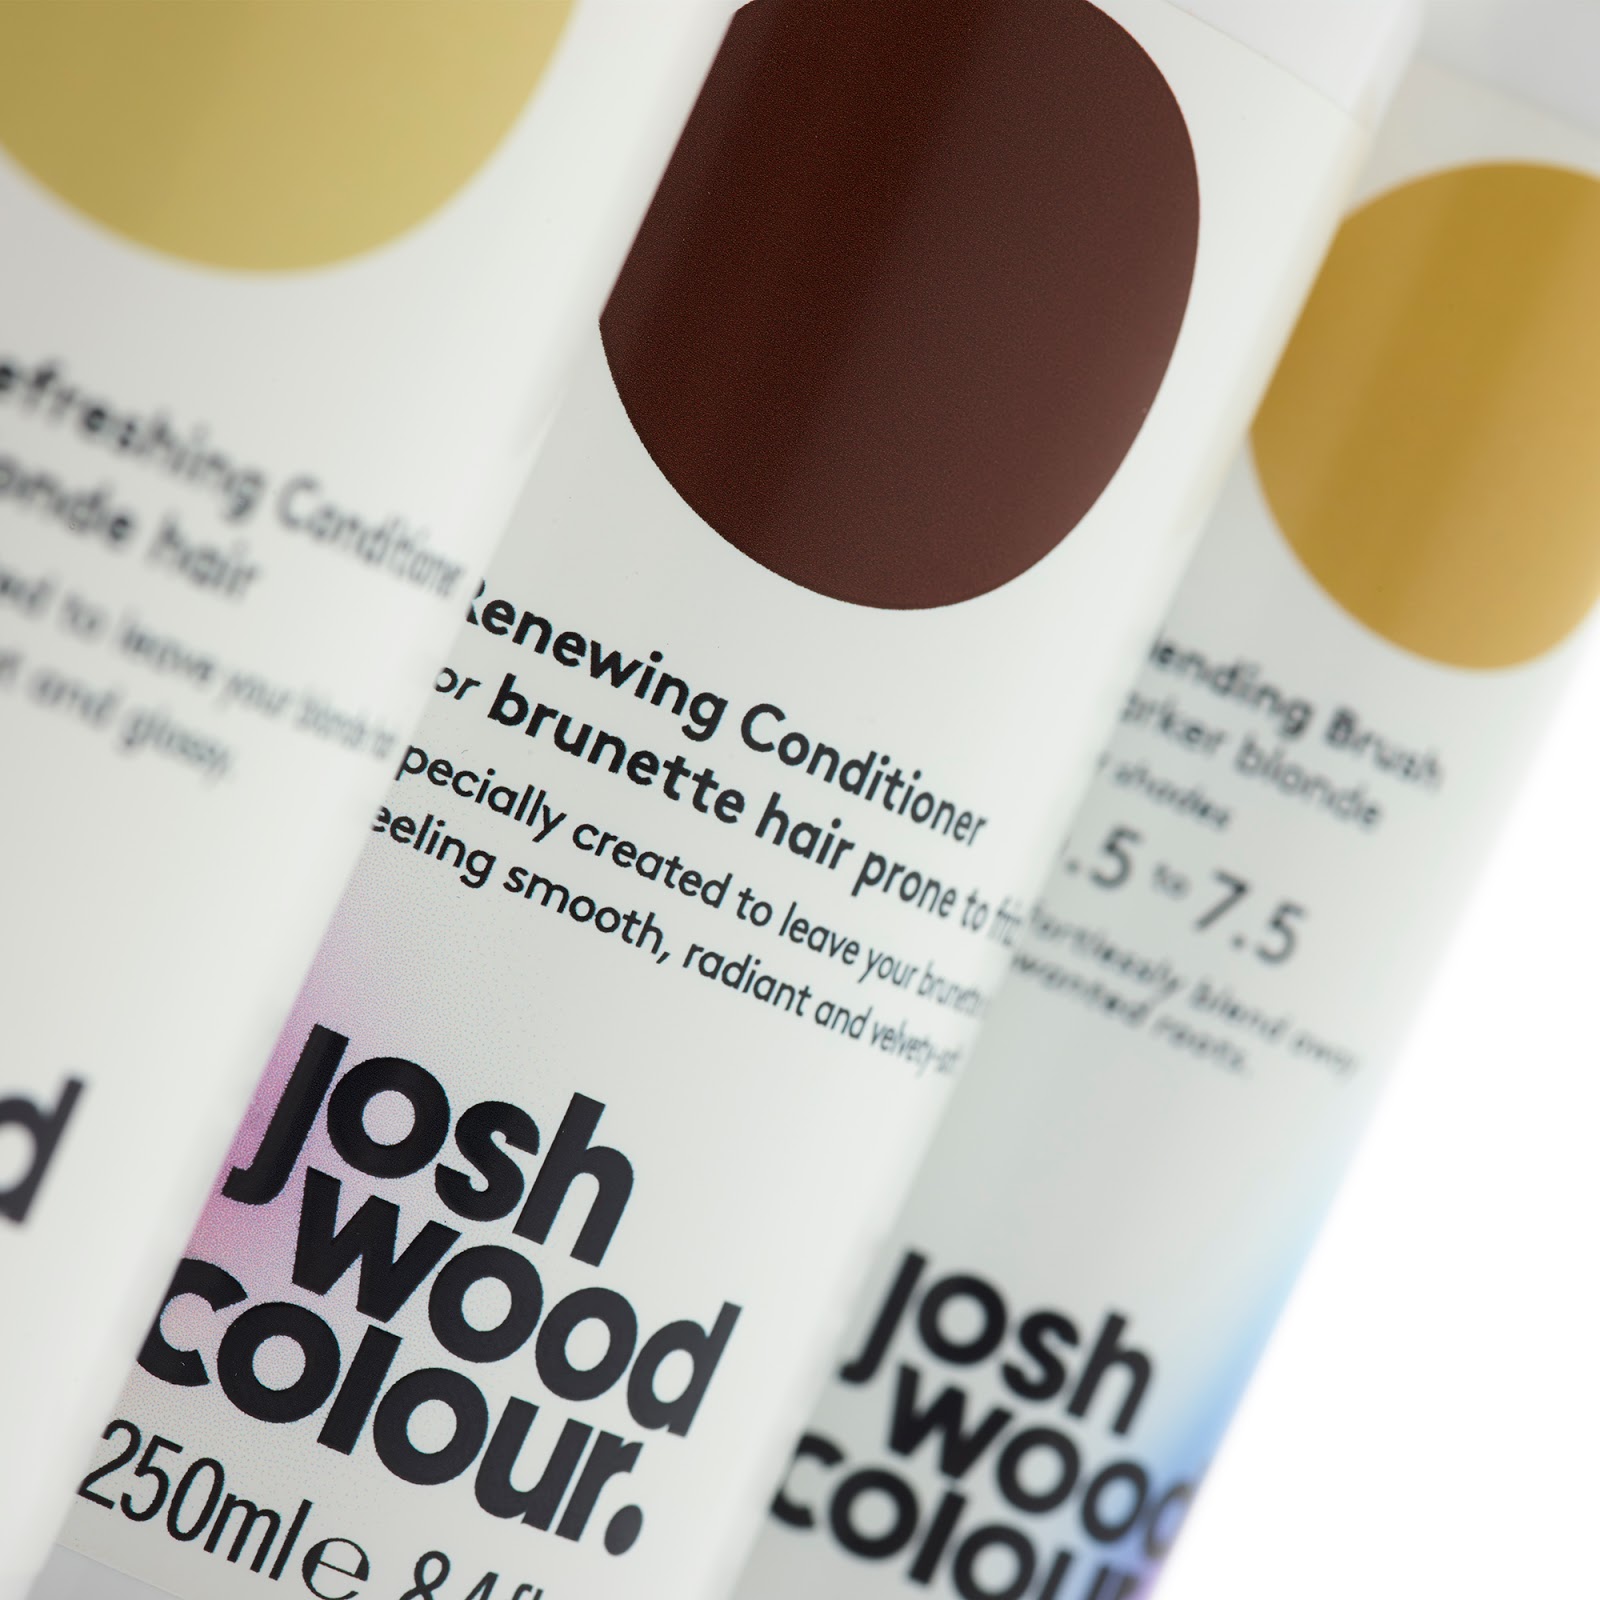 Josh Wood Colour染发剂包装设计